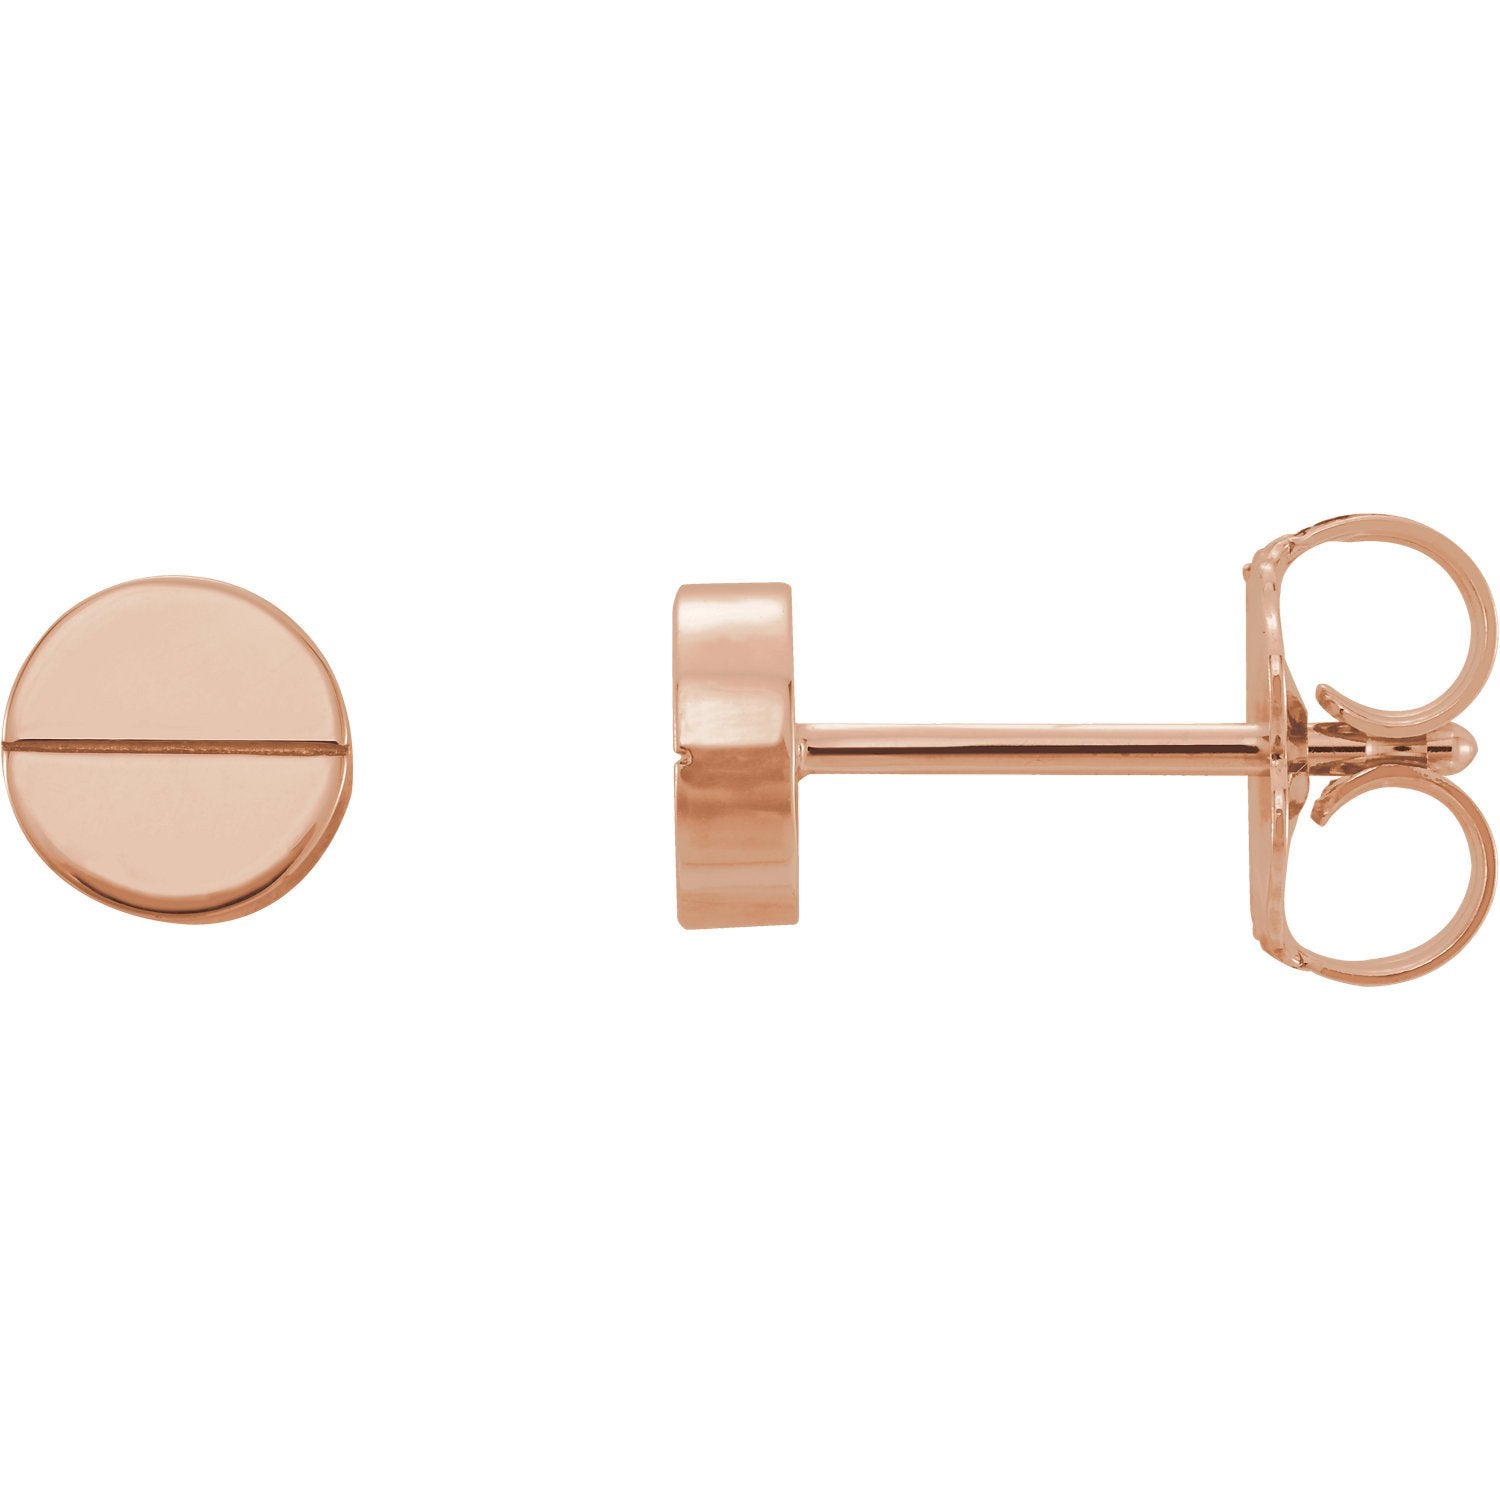 Geometric Earrings with Backs - 14K Rose Gold